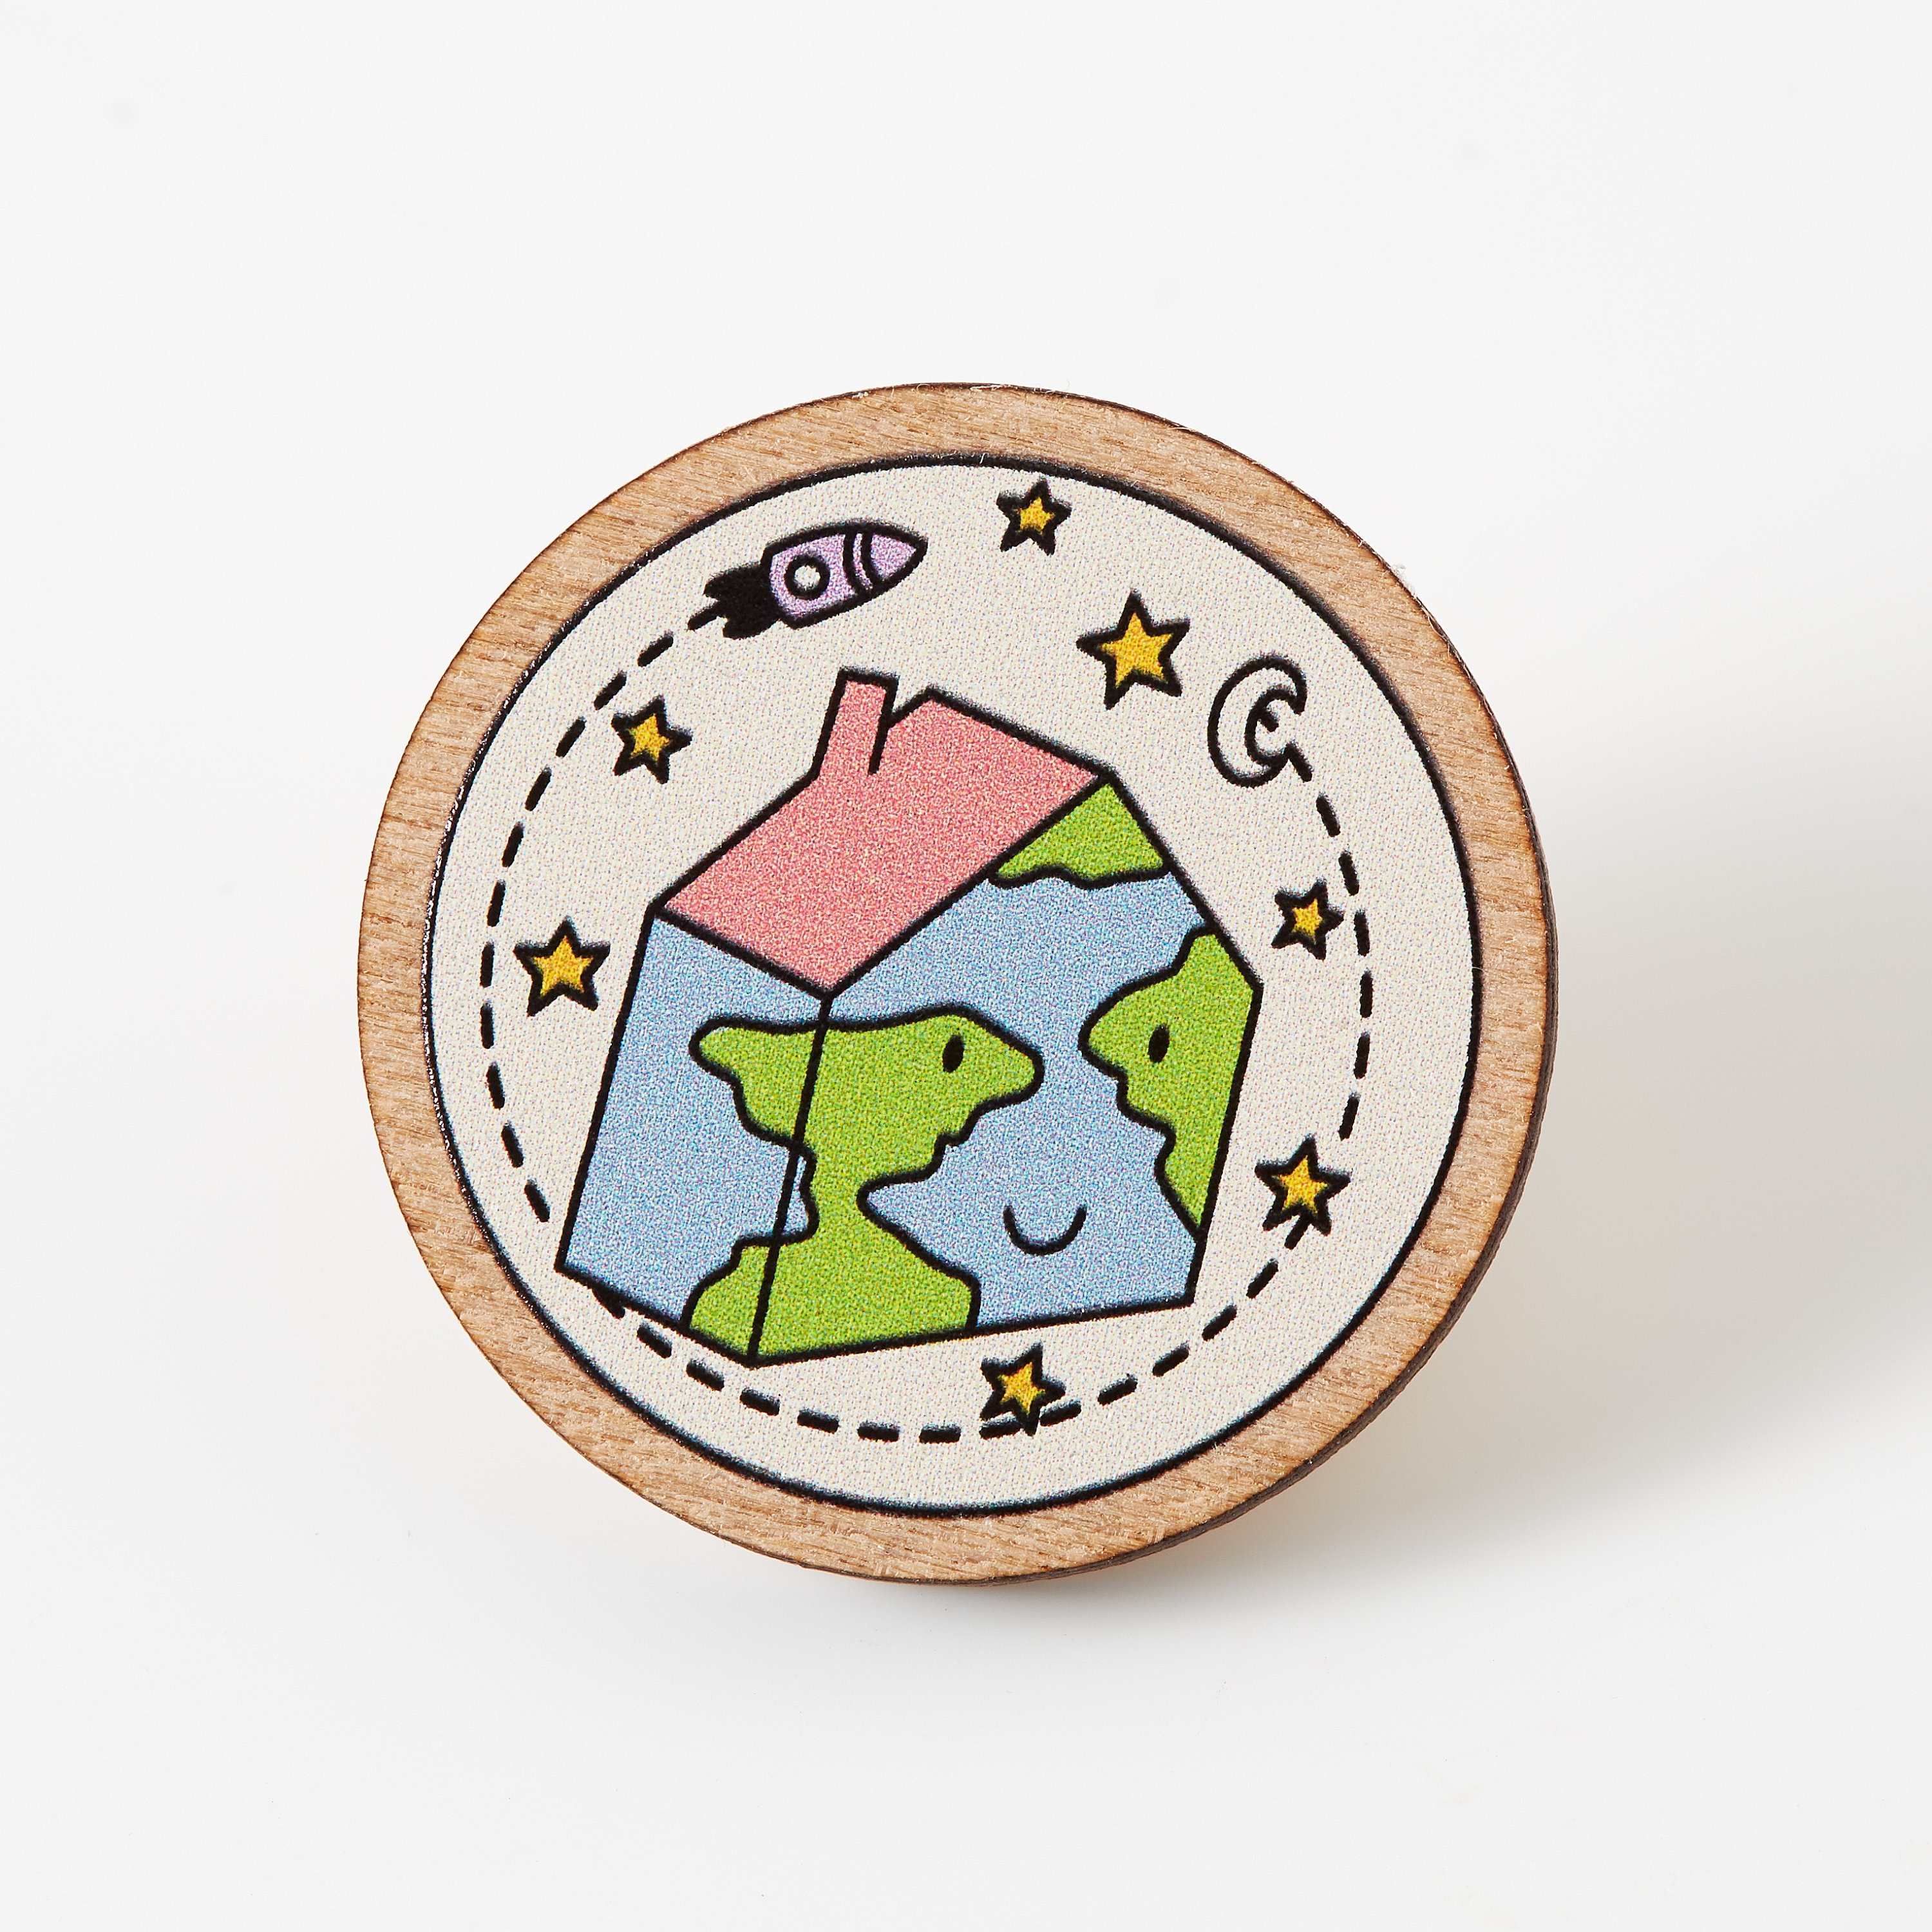 Eco-Metal Pin Badges, Environmentally Friendly Enamel Pins